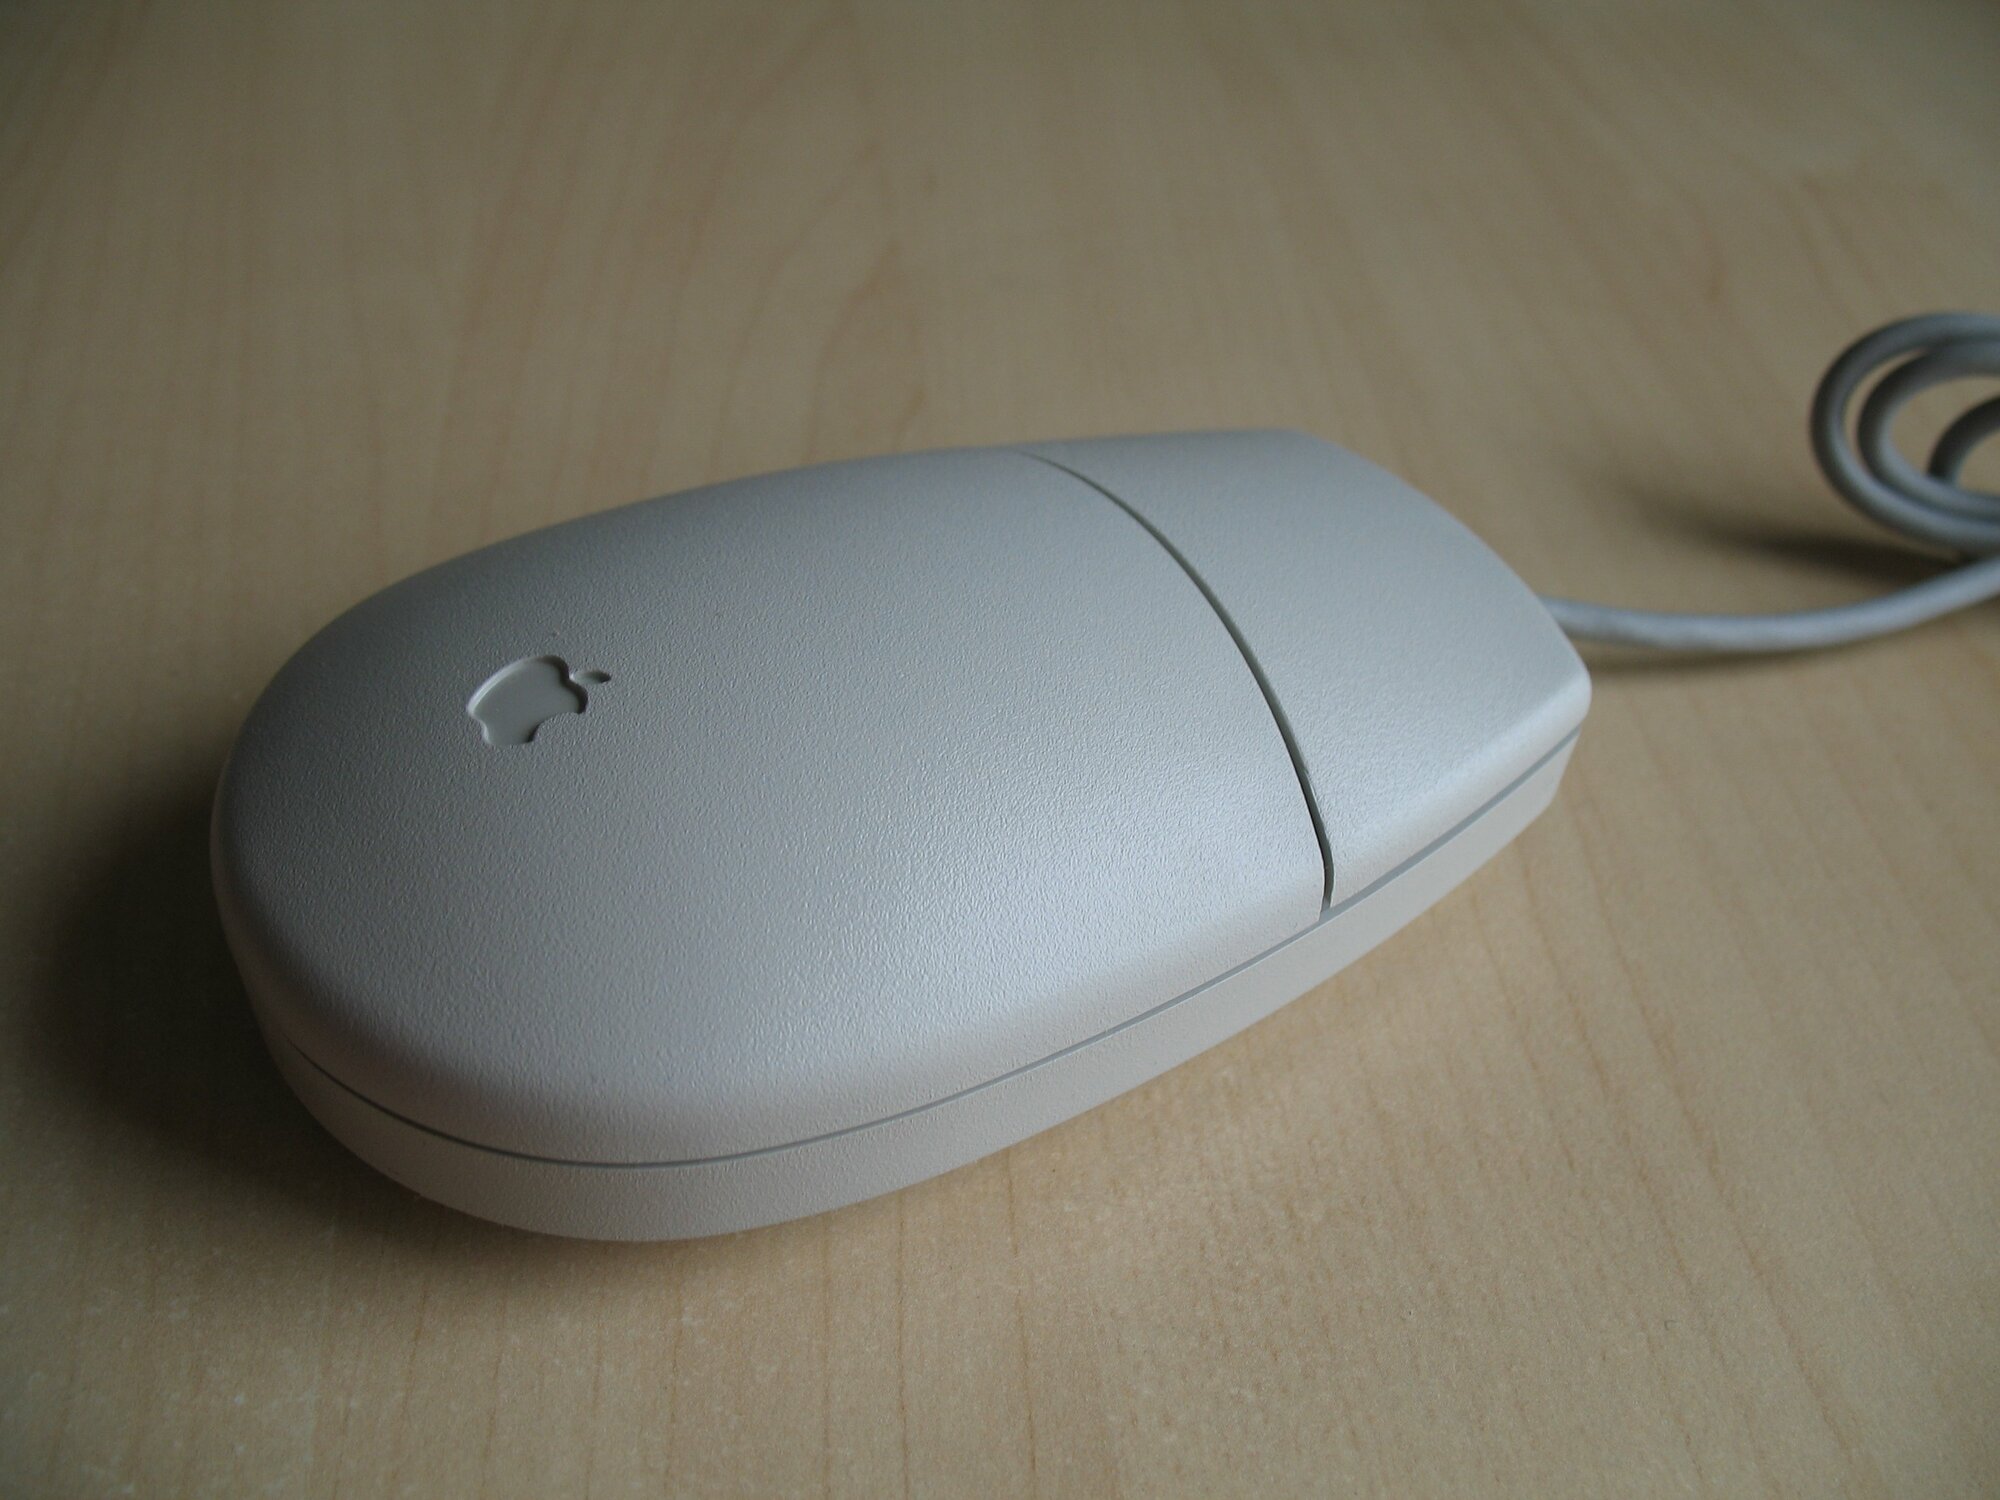 Apple-ADB-mouse.jpg